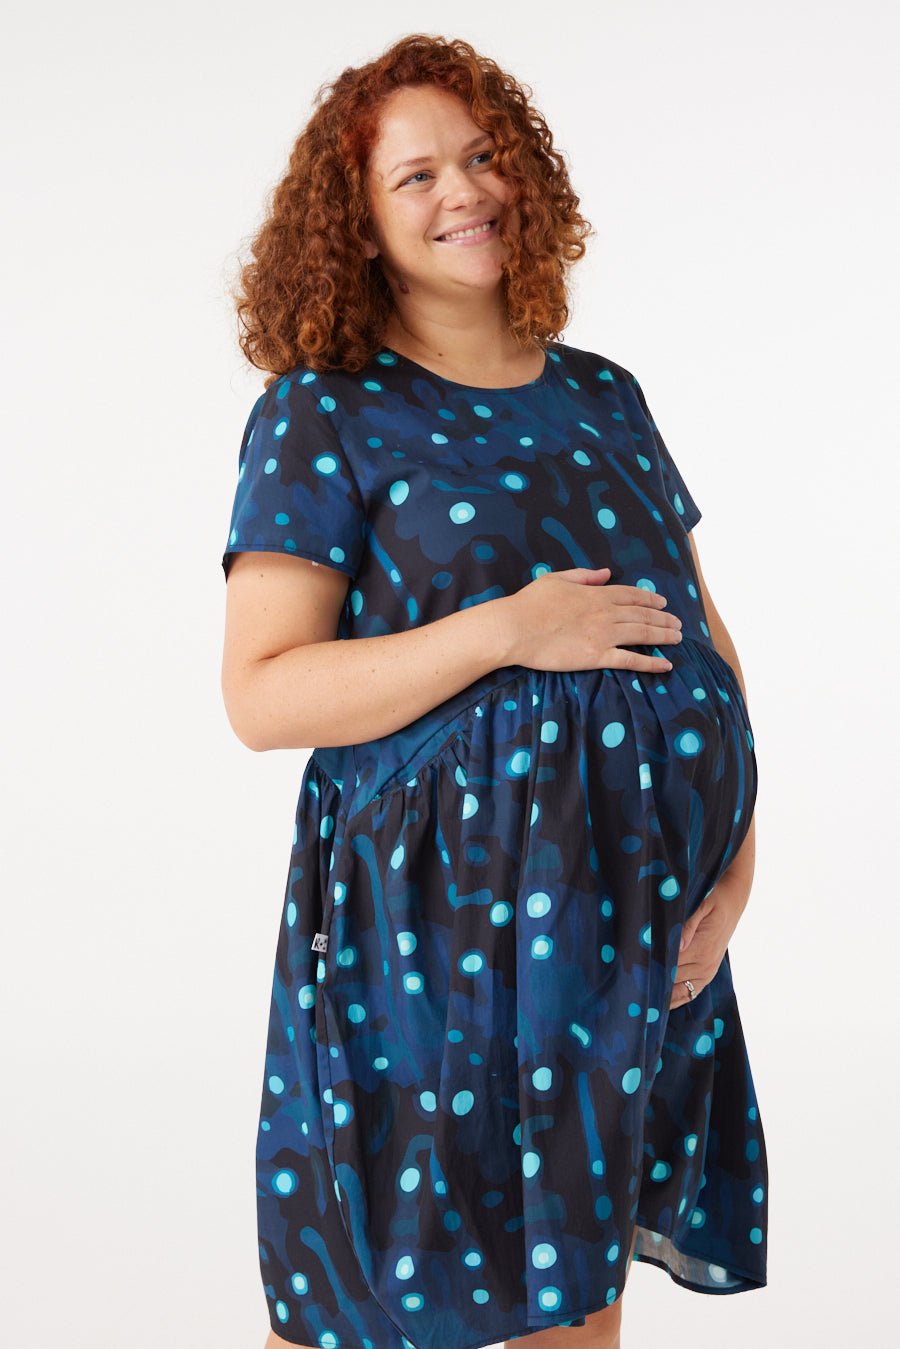 Maternity and Breastfeeding Dress - Isla Style - Rex and Isla